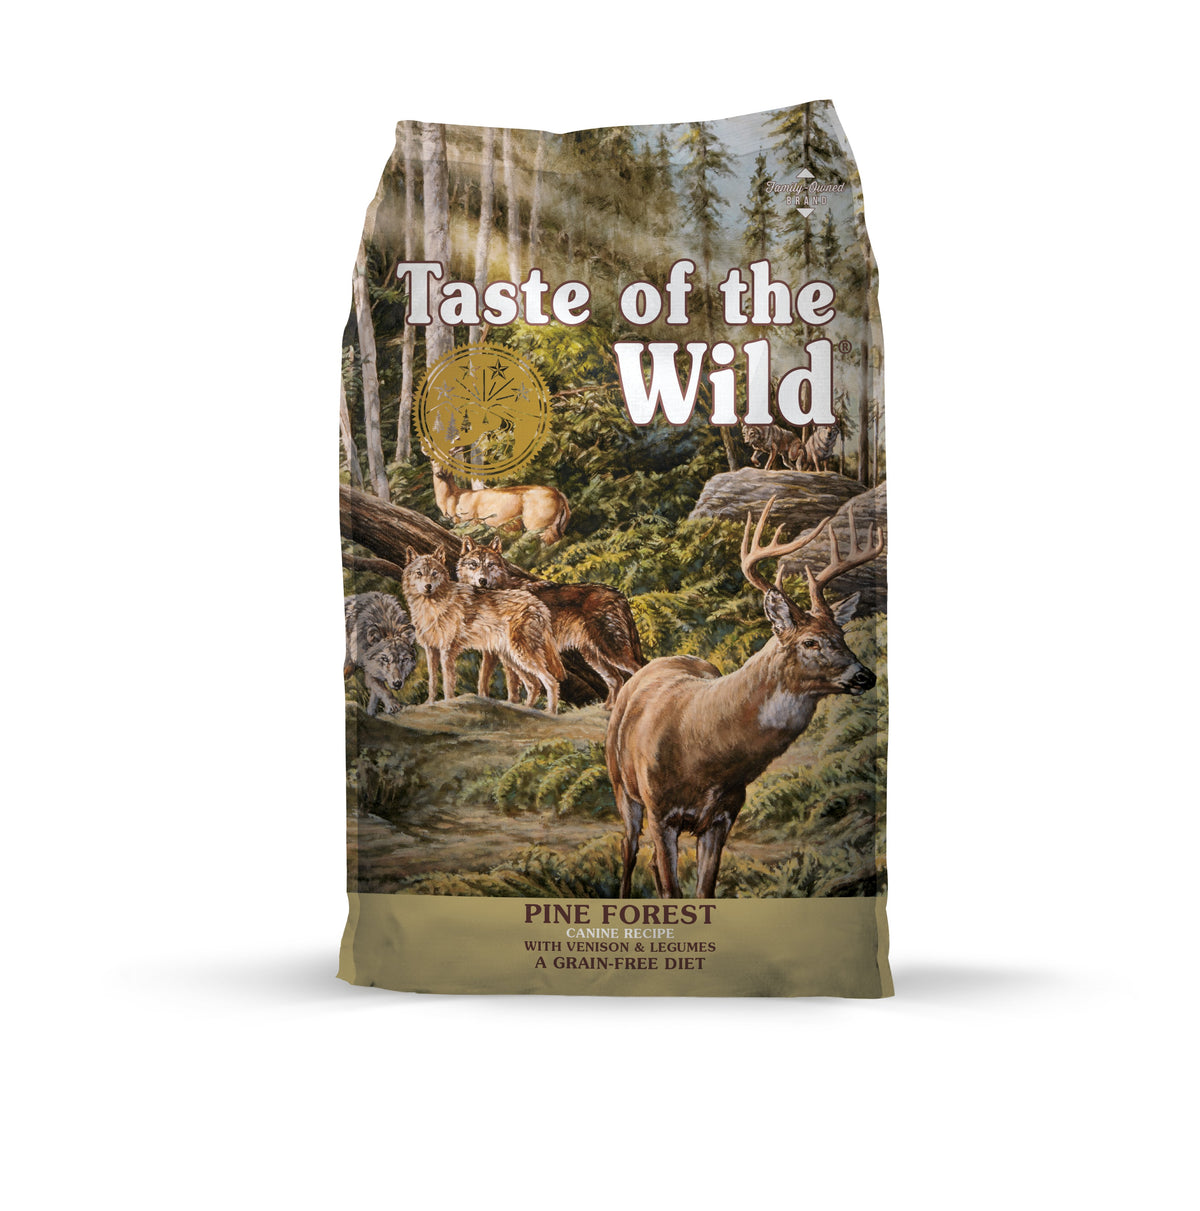 TASTE OF THE WILD PINE FOREST DOG FOOD Venison/Legume 28LB-Four Muddy Paws